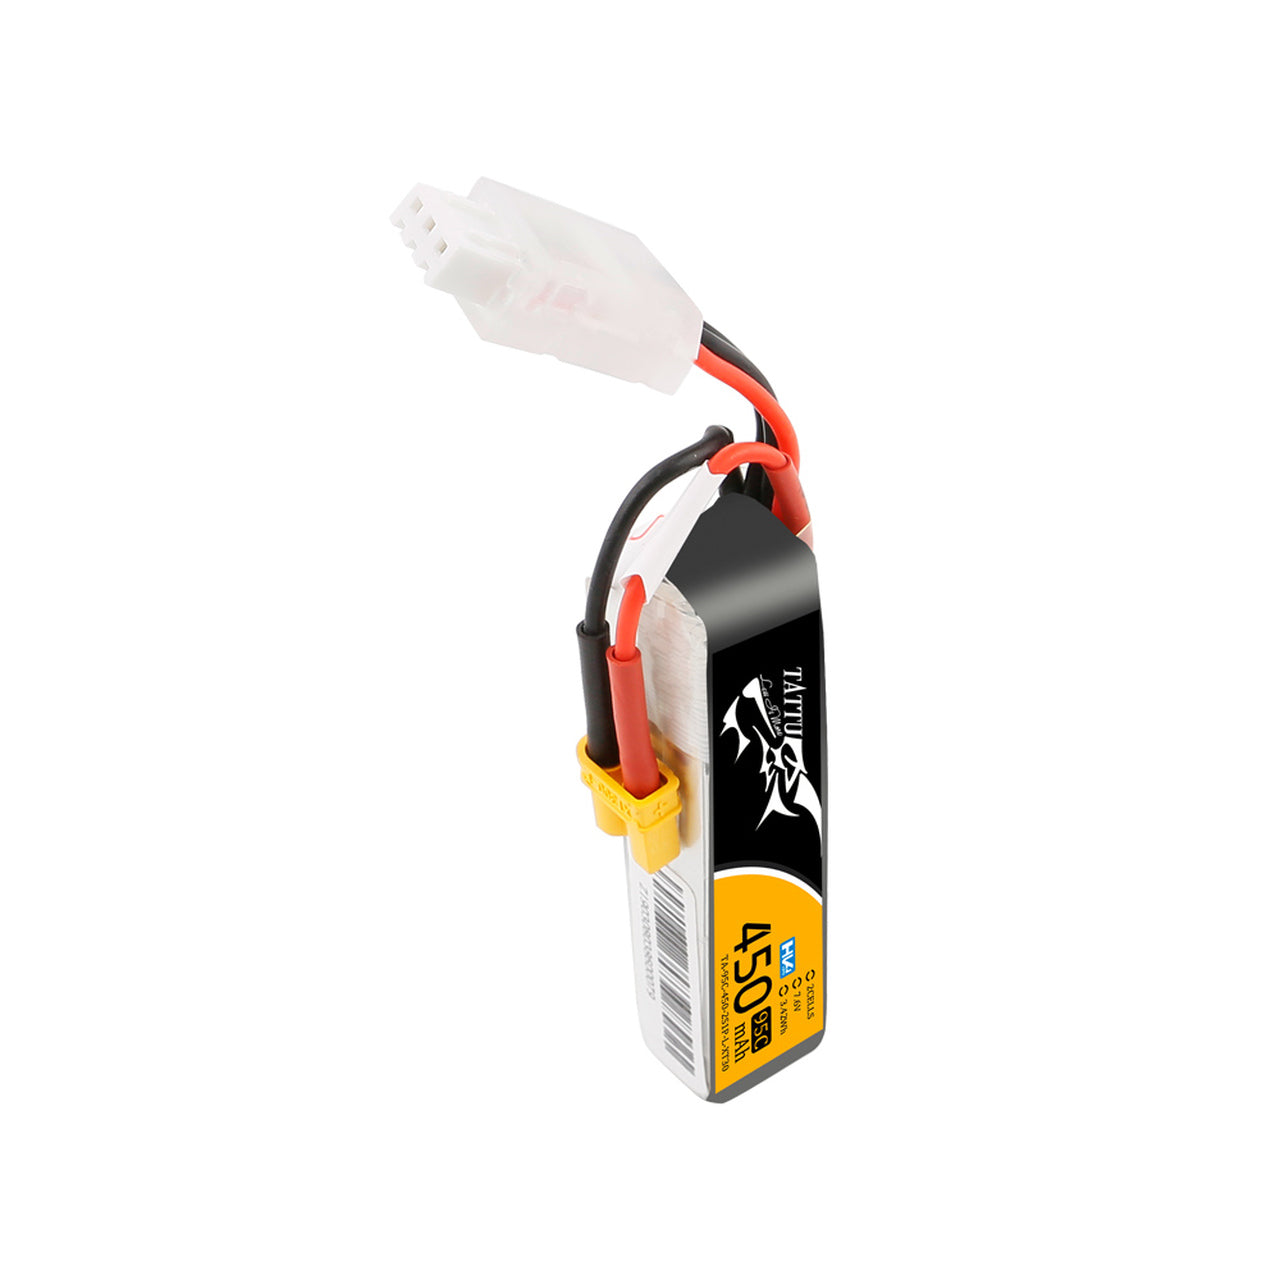 Tattu 450mAh 7.6V High Voltage 95C 2S1P Lipo Battery Pack with XT30 Plug - Long Pack - DroneLabs.ca